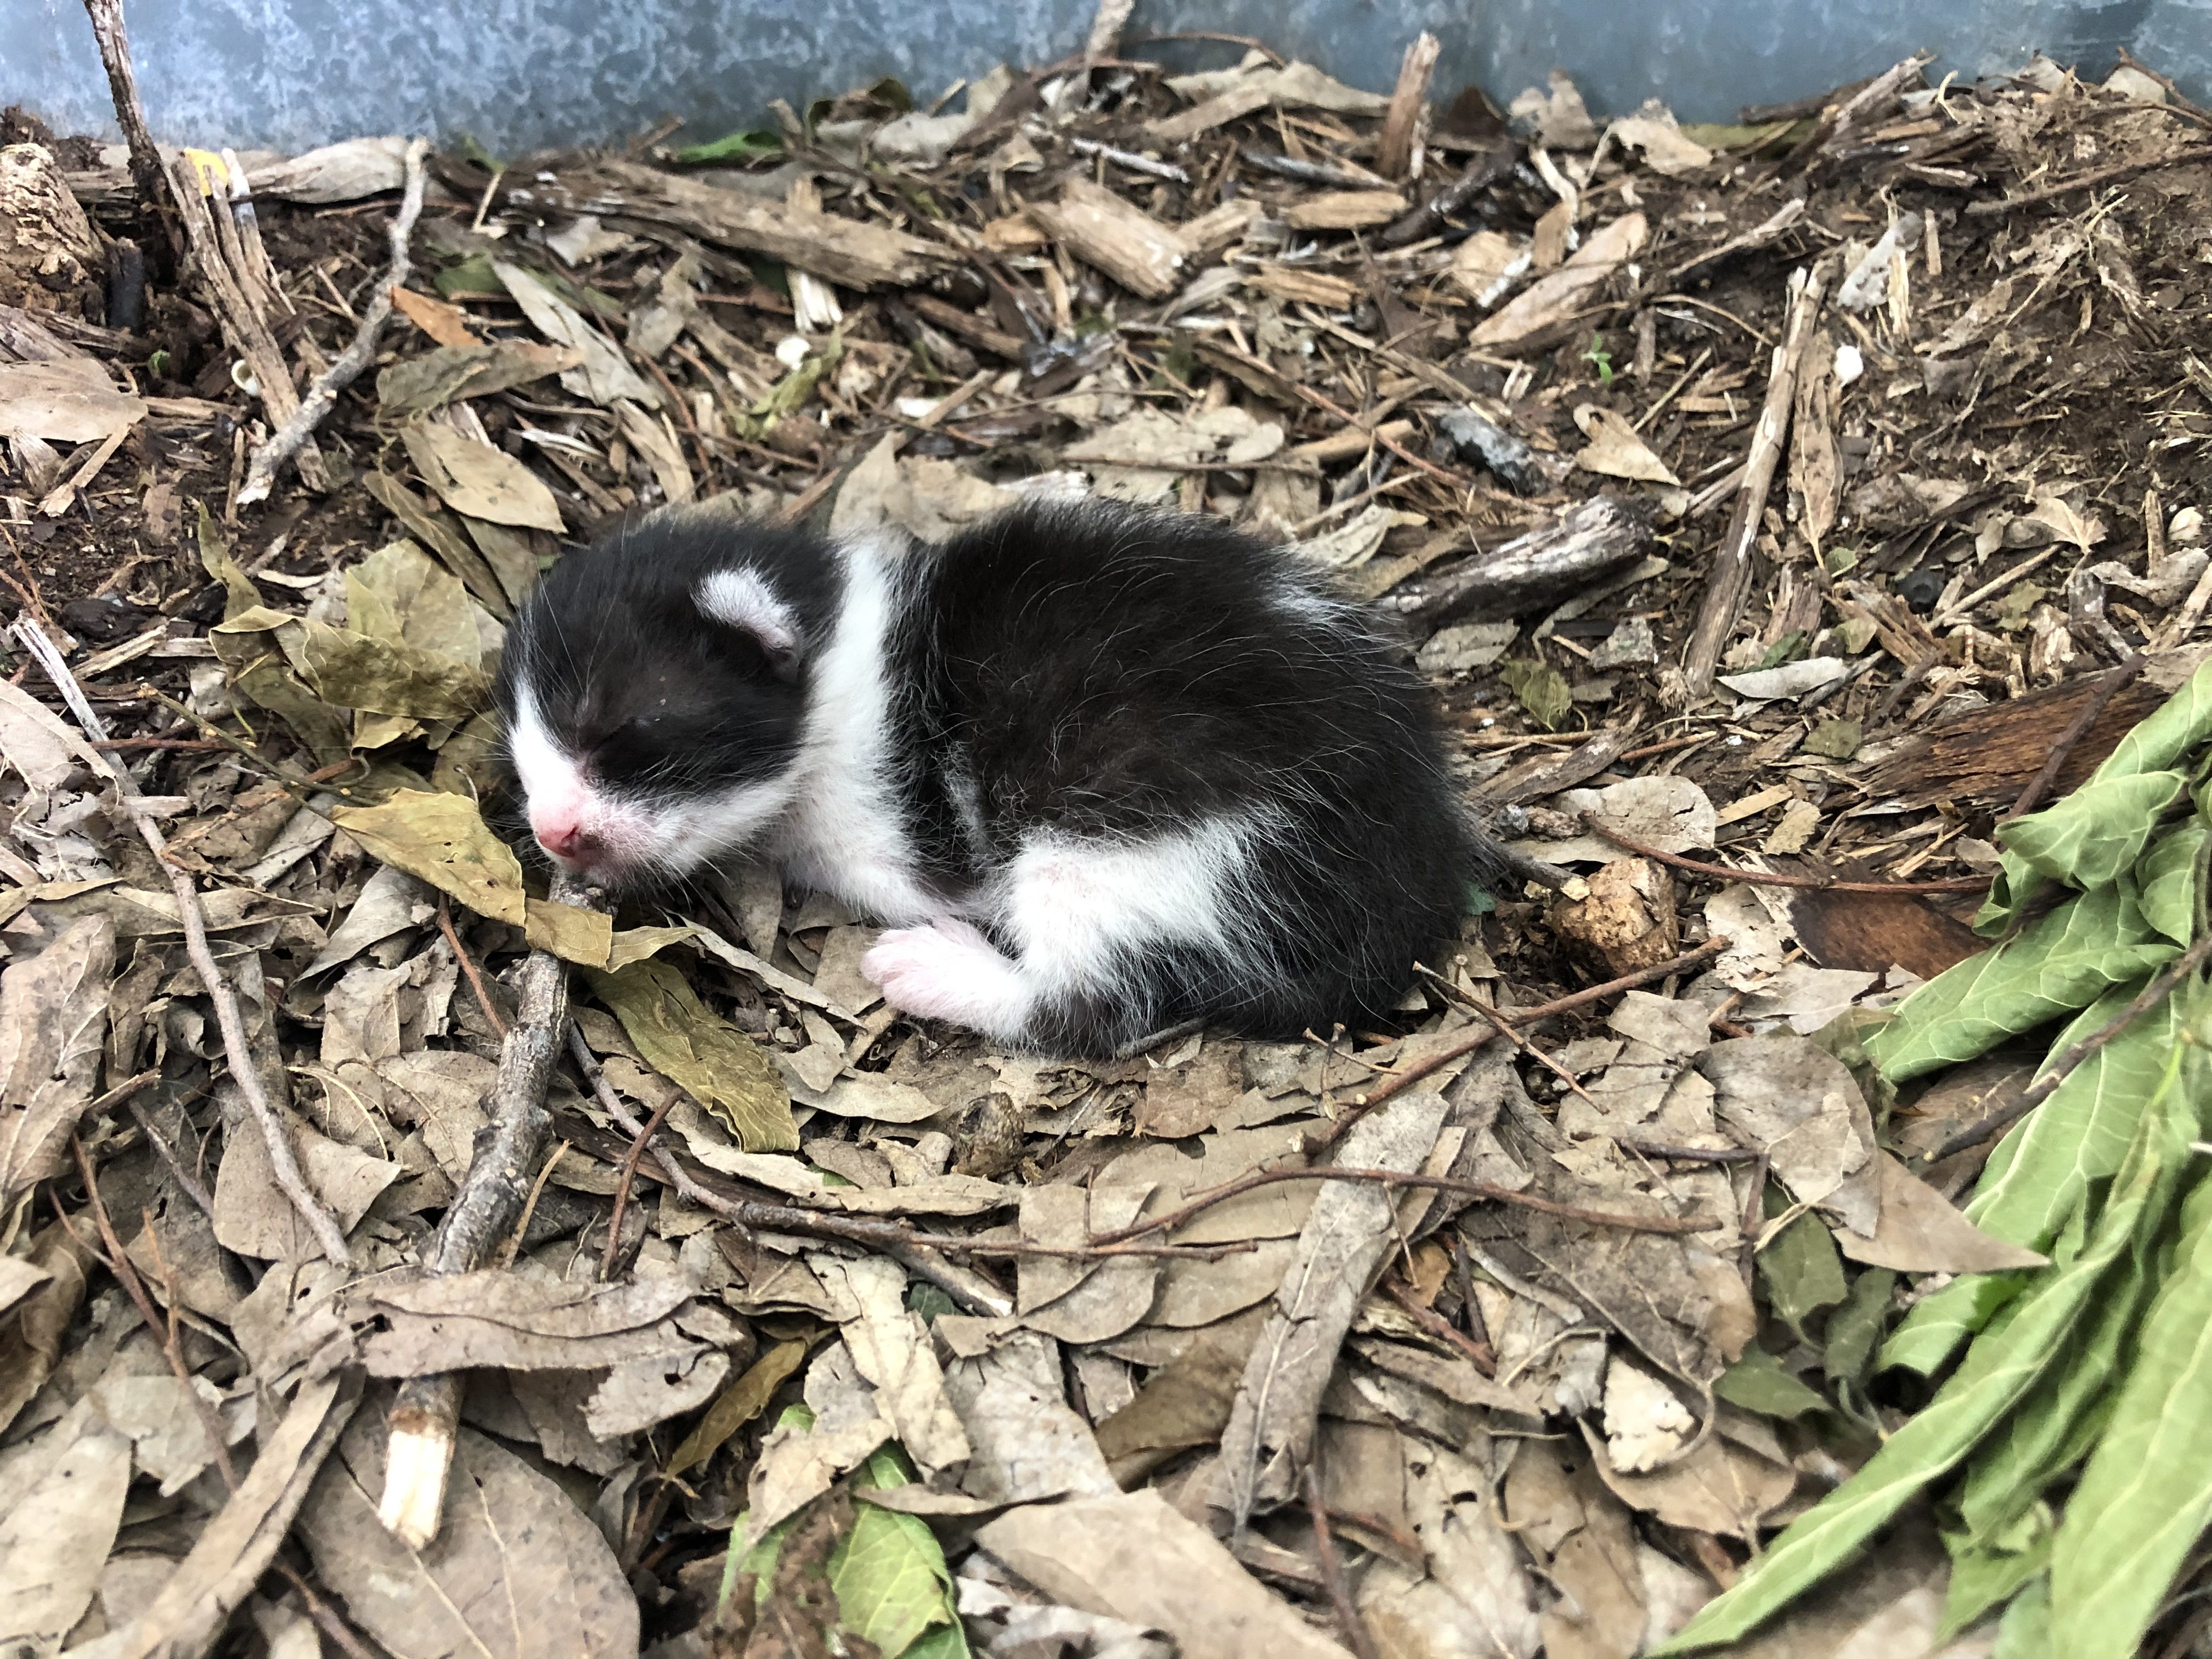 Mosie in the Compost Bin 3-4 days old. 
Alley Cat Allies